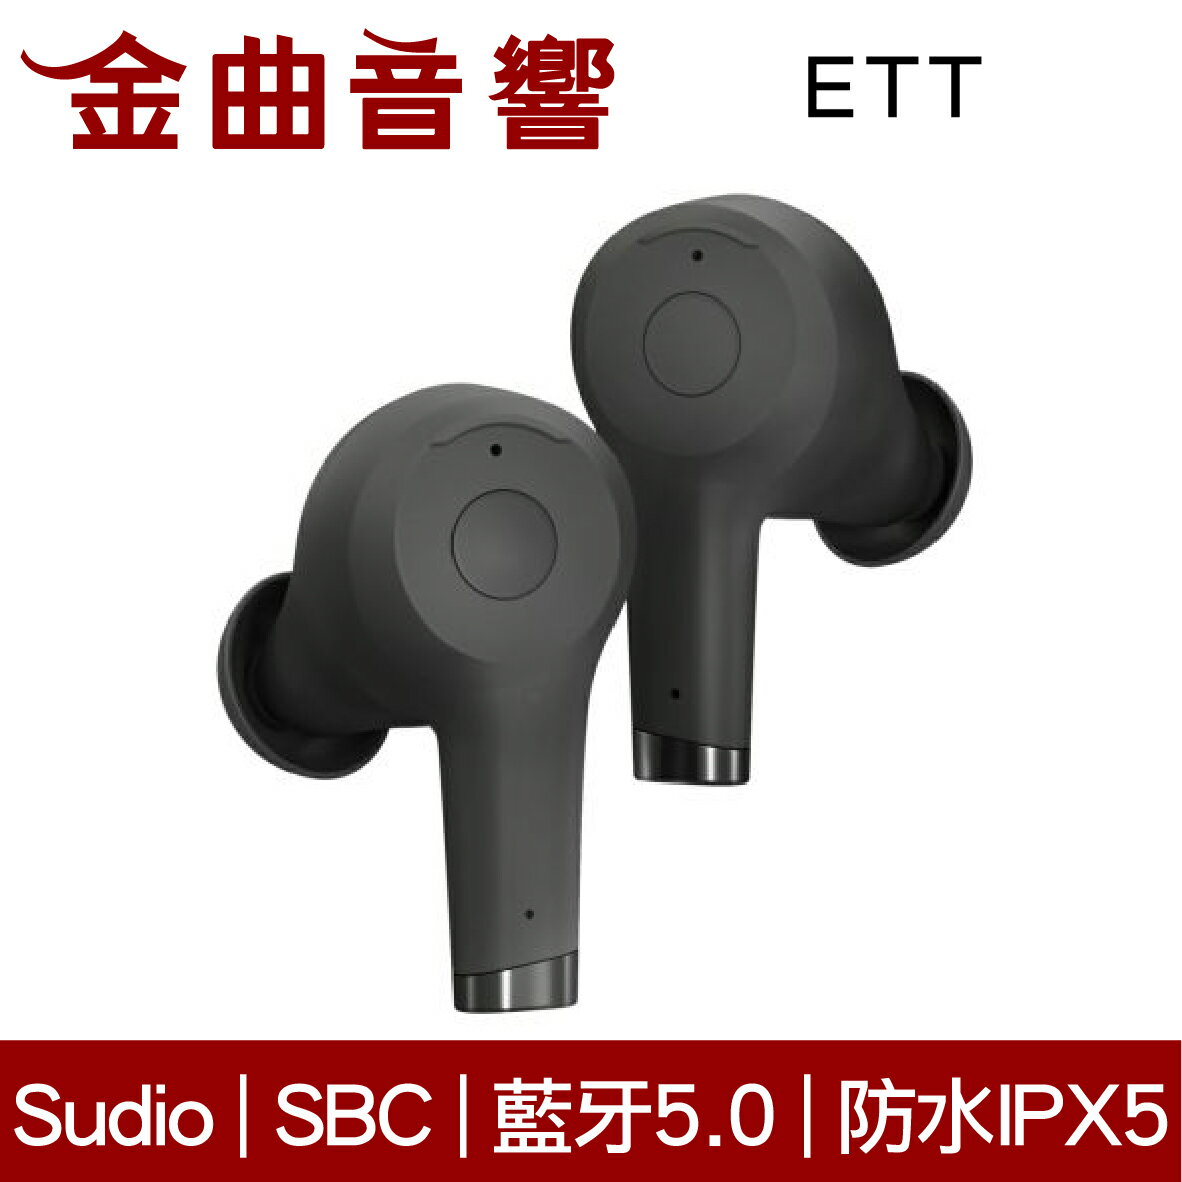 Sudio ETT 黑色 防水 無線 ANC 降噪 藍芽 耳機 | 金曲音響